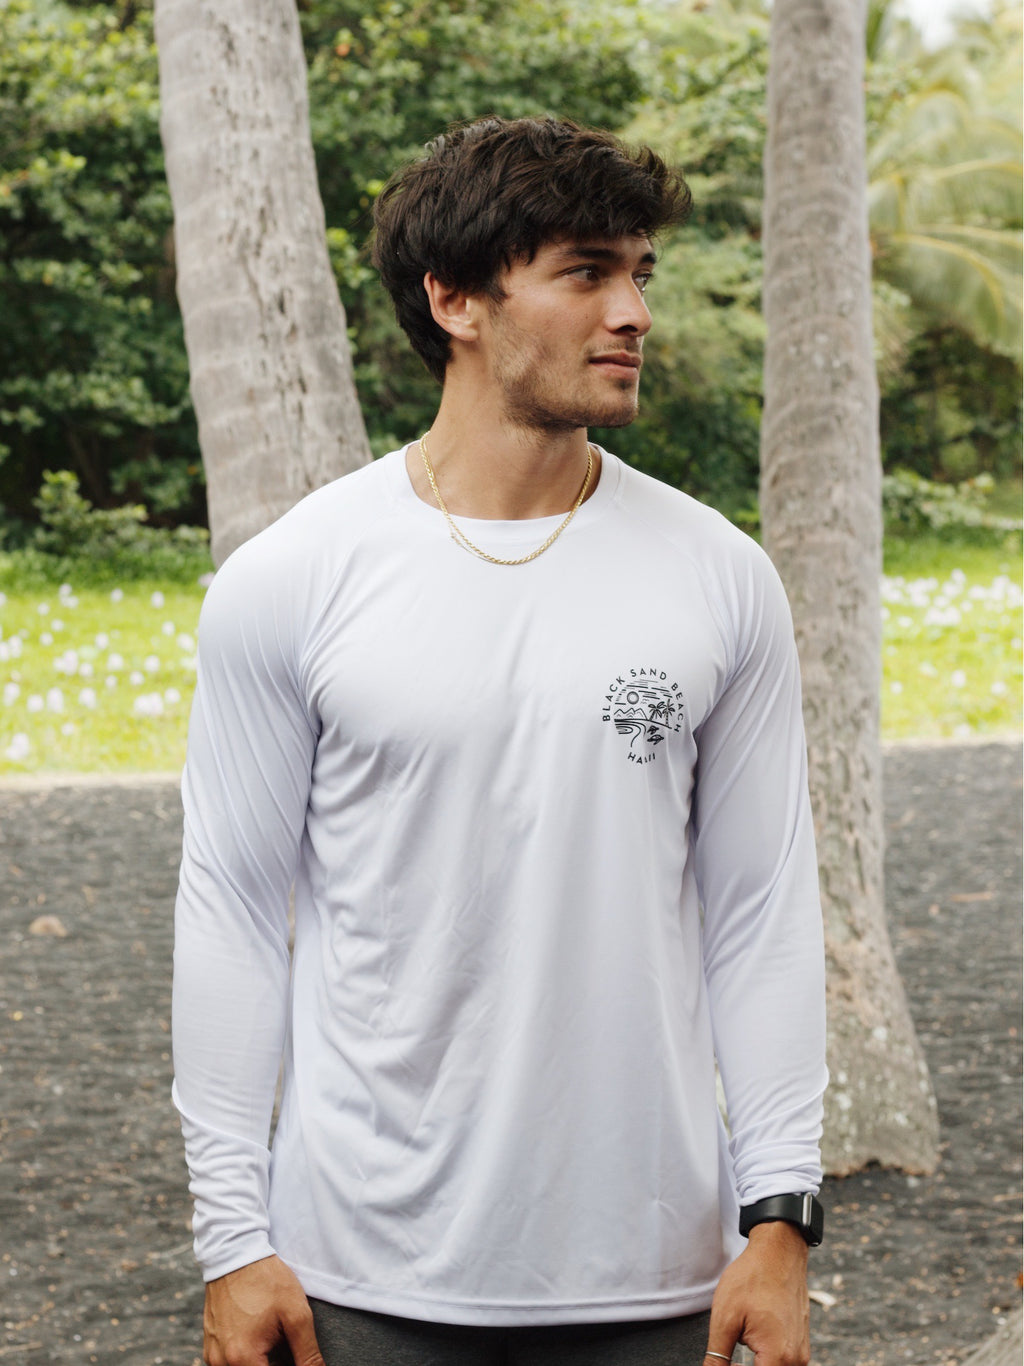 UPF 50+ Sunscreen Dri-Fit Shirt